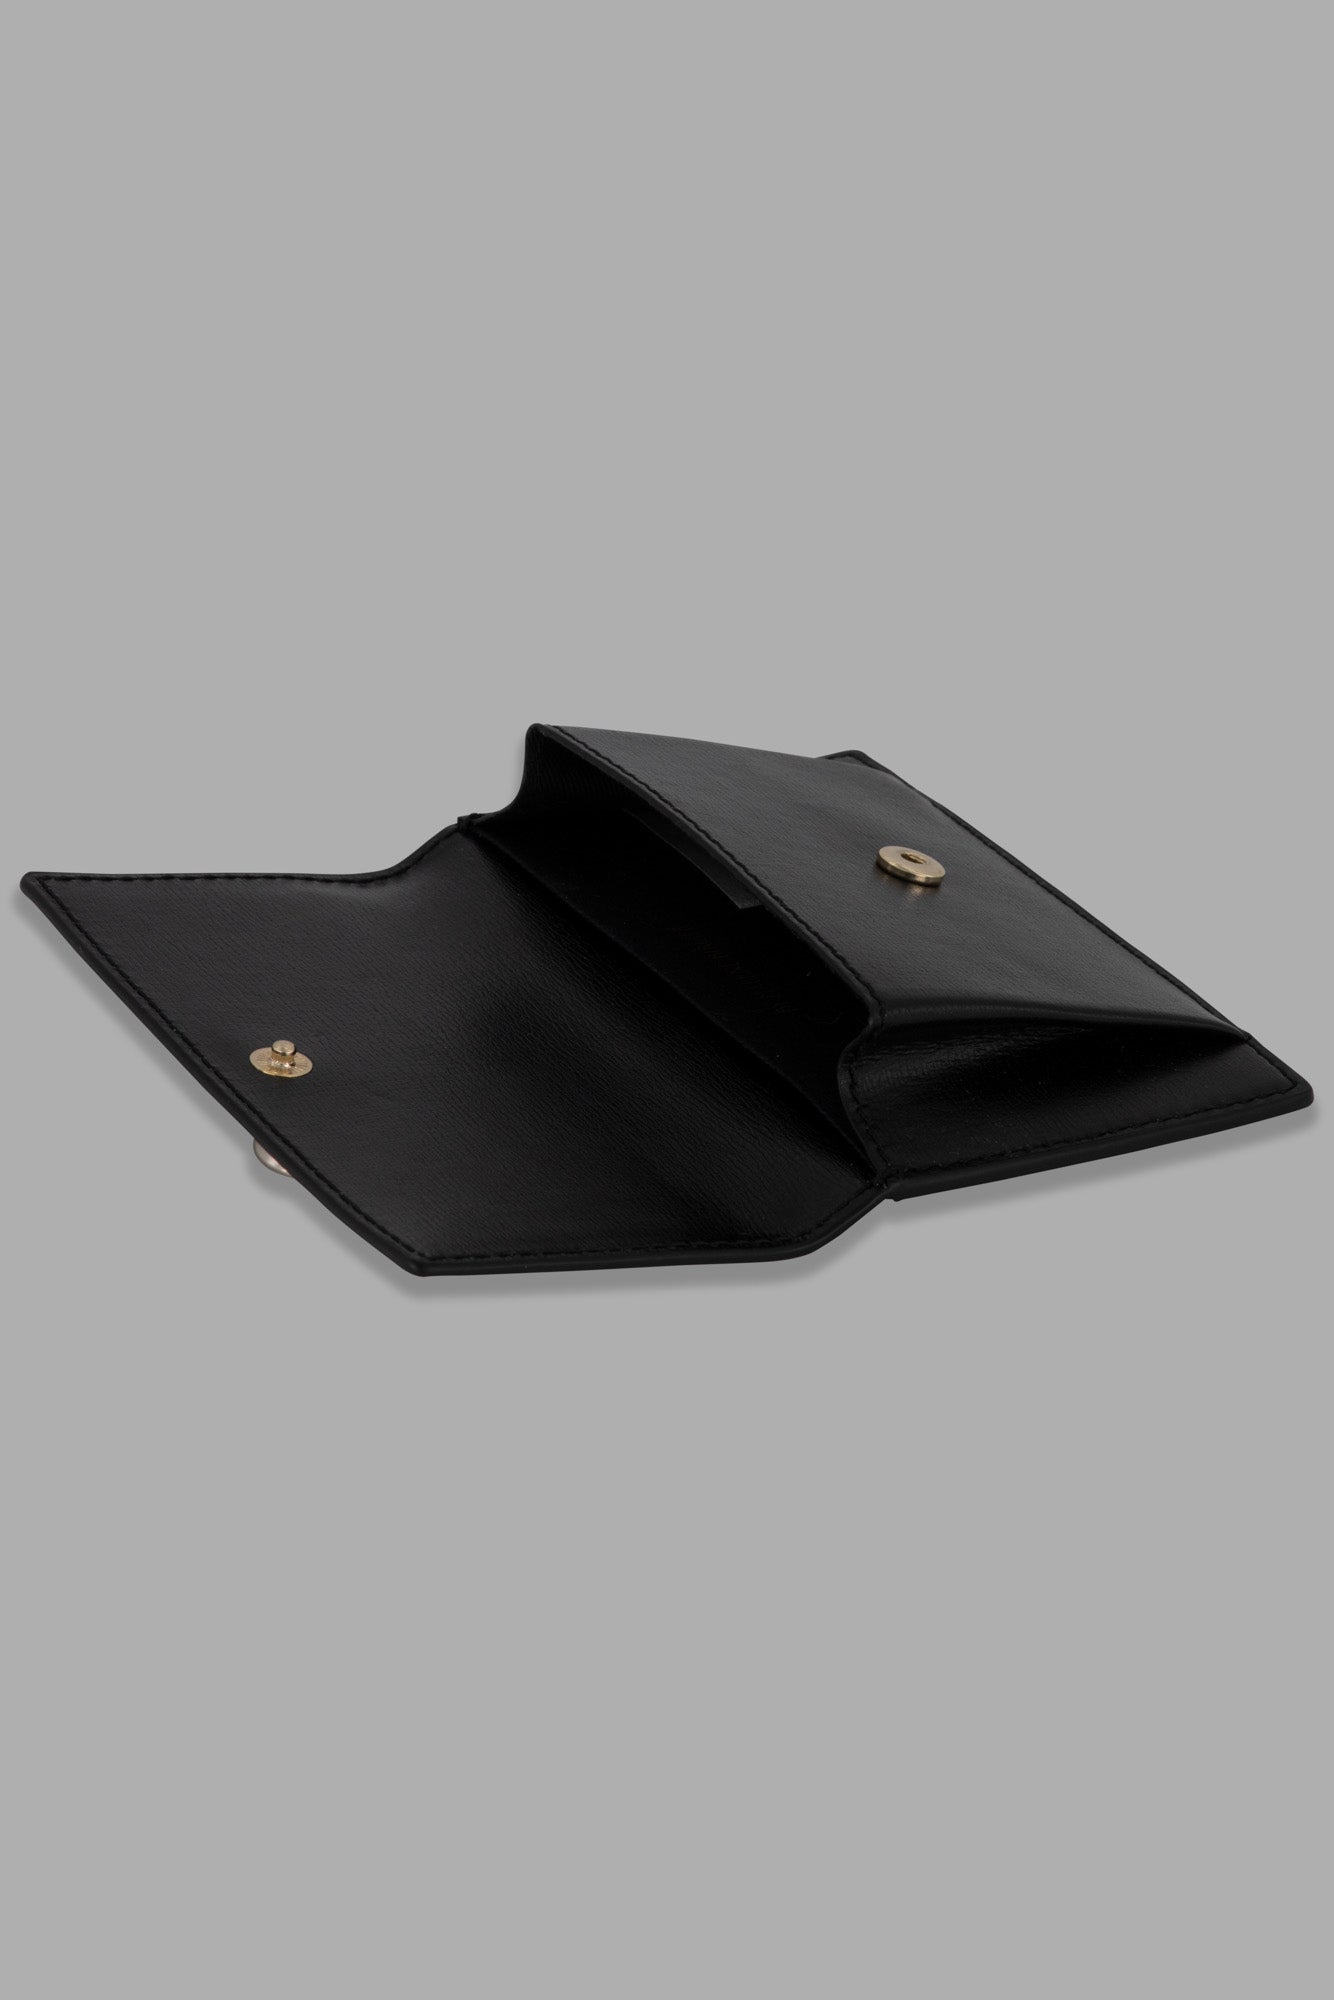 Aya Leather Wallet in Black